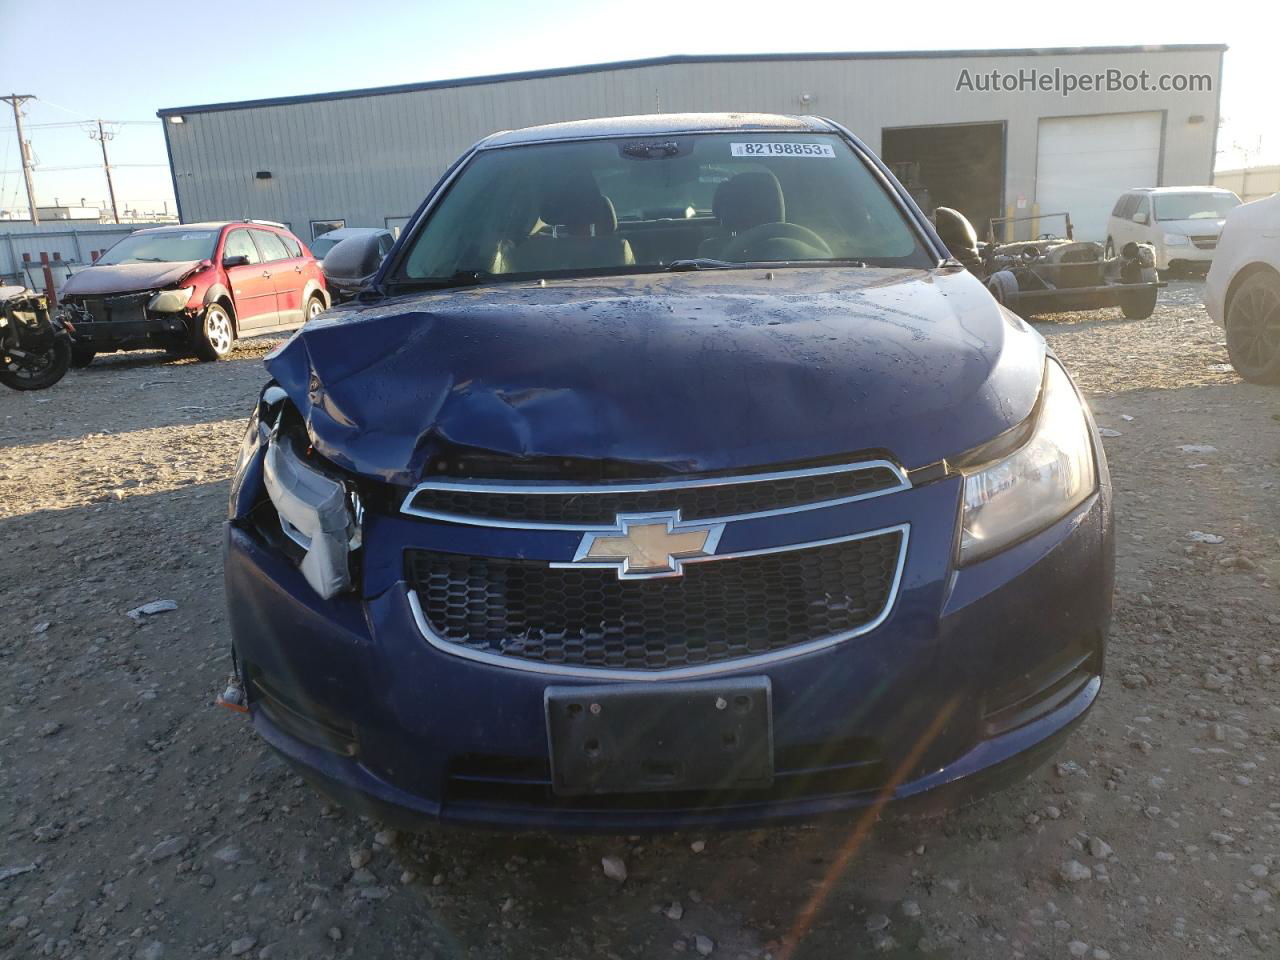 2013 Chevrolet Cruze Ls Синий vin: 1G1PA5SH0D7127381